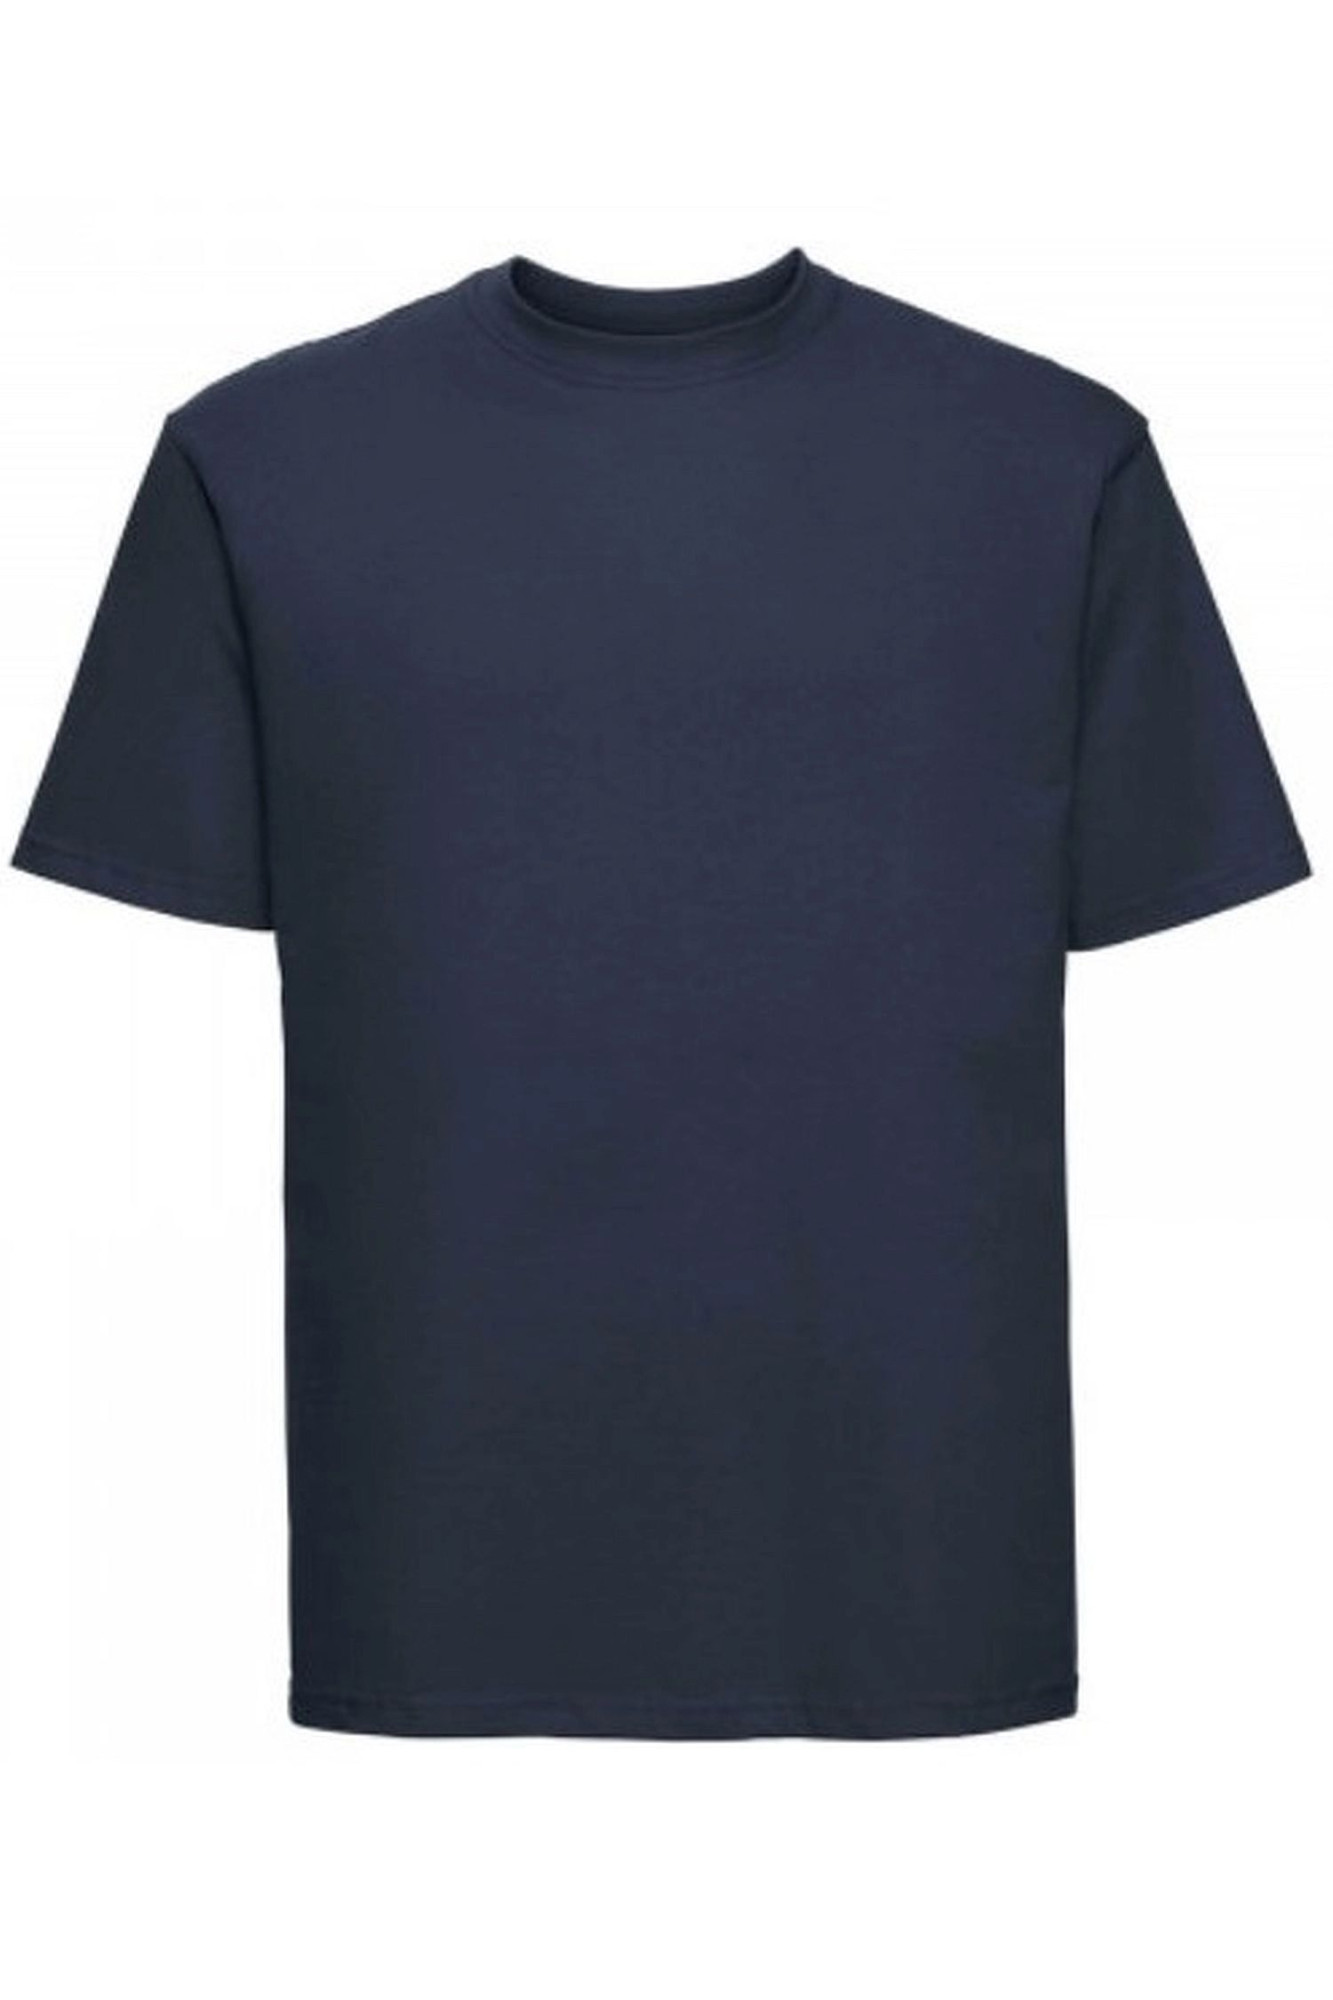 Pánské tričko 002 dark blue - NOVITI tmavě modrá XL